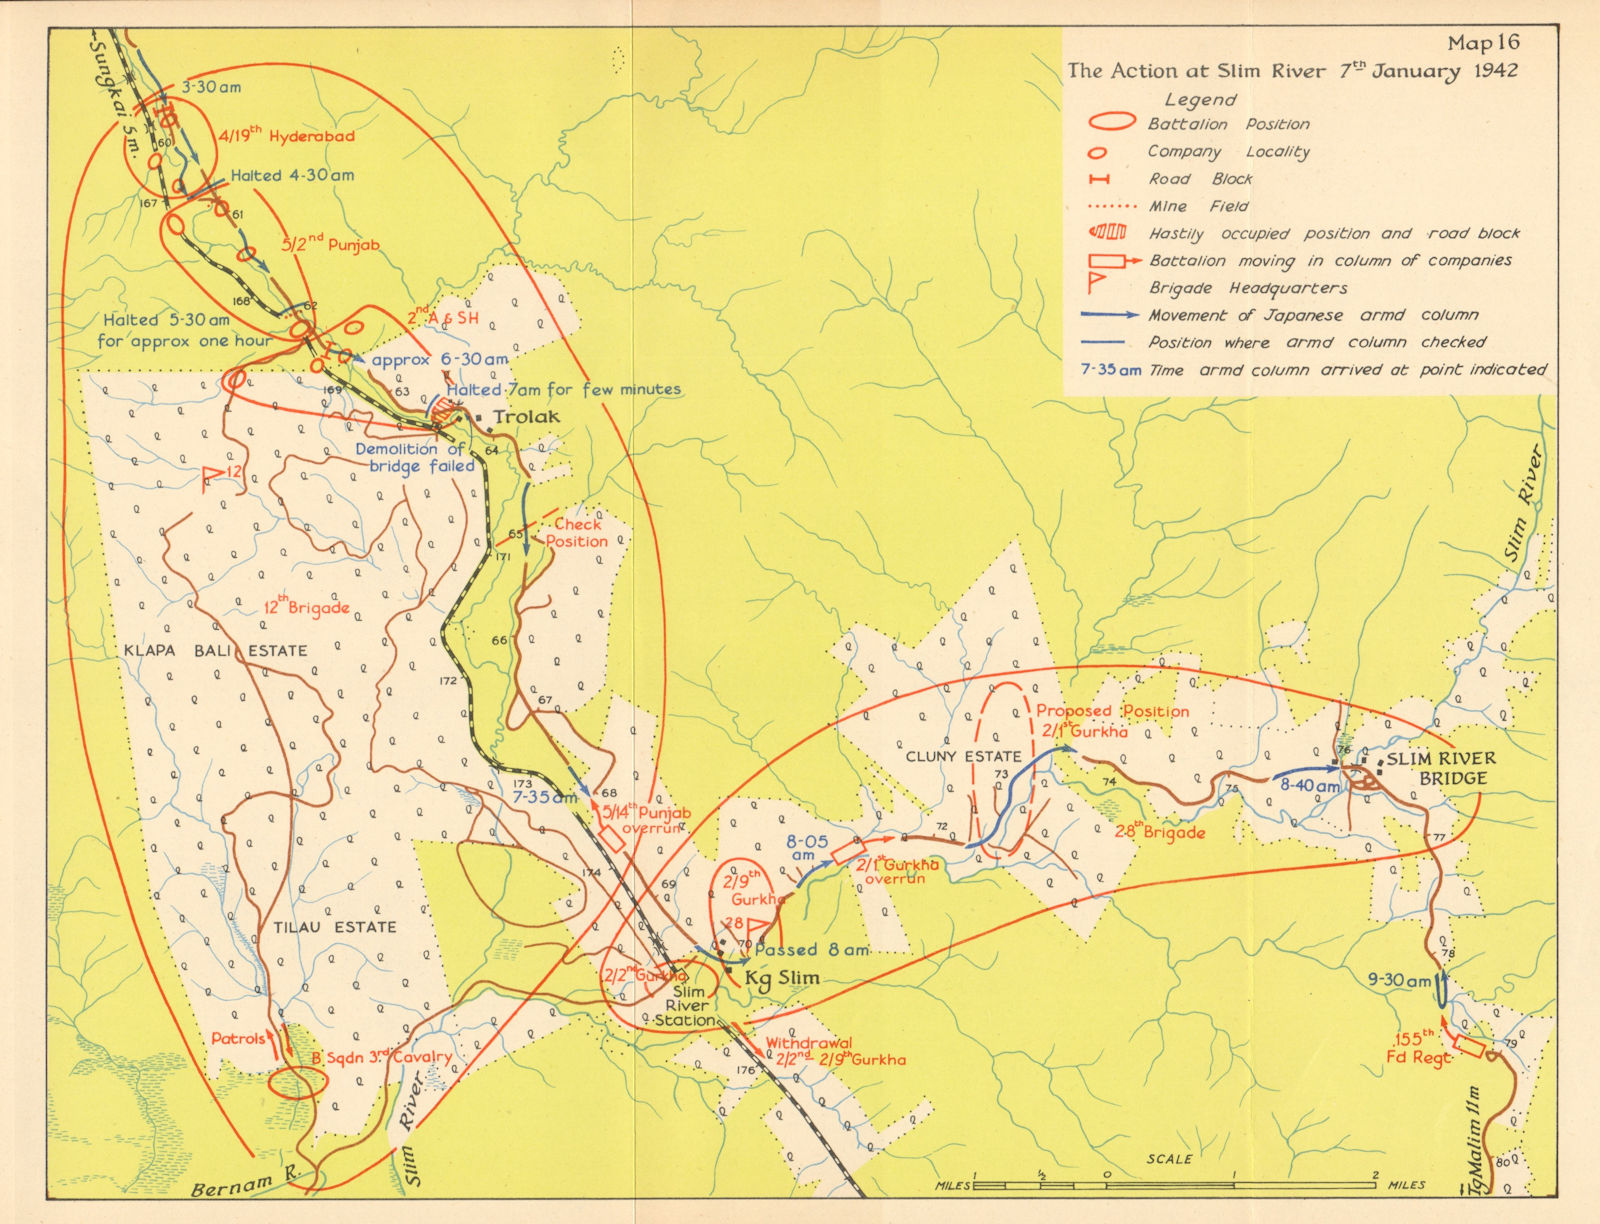 Battle of Slim River, 7th January 1942. Japanese invasion of Malaya 1957 map